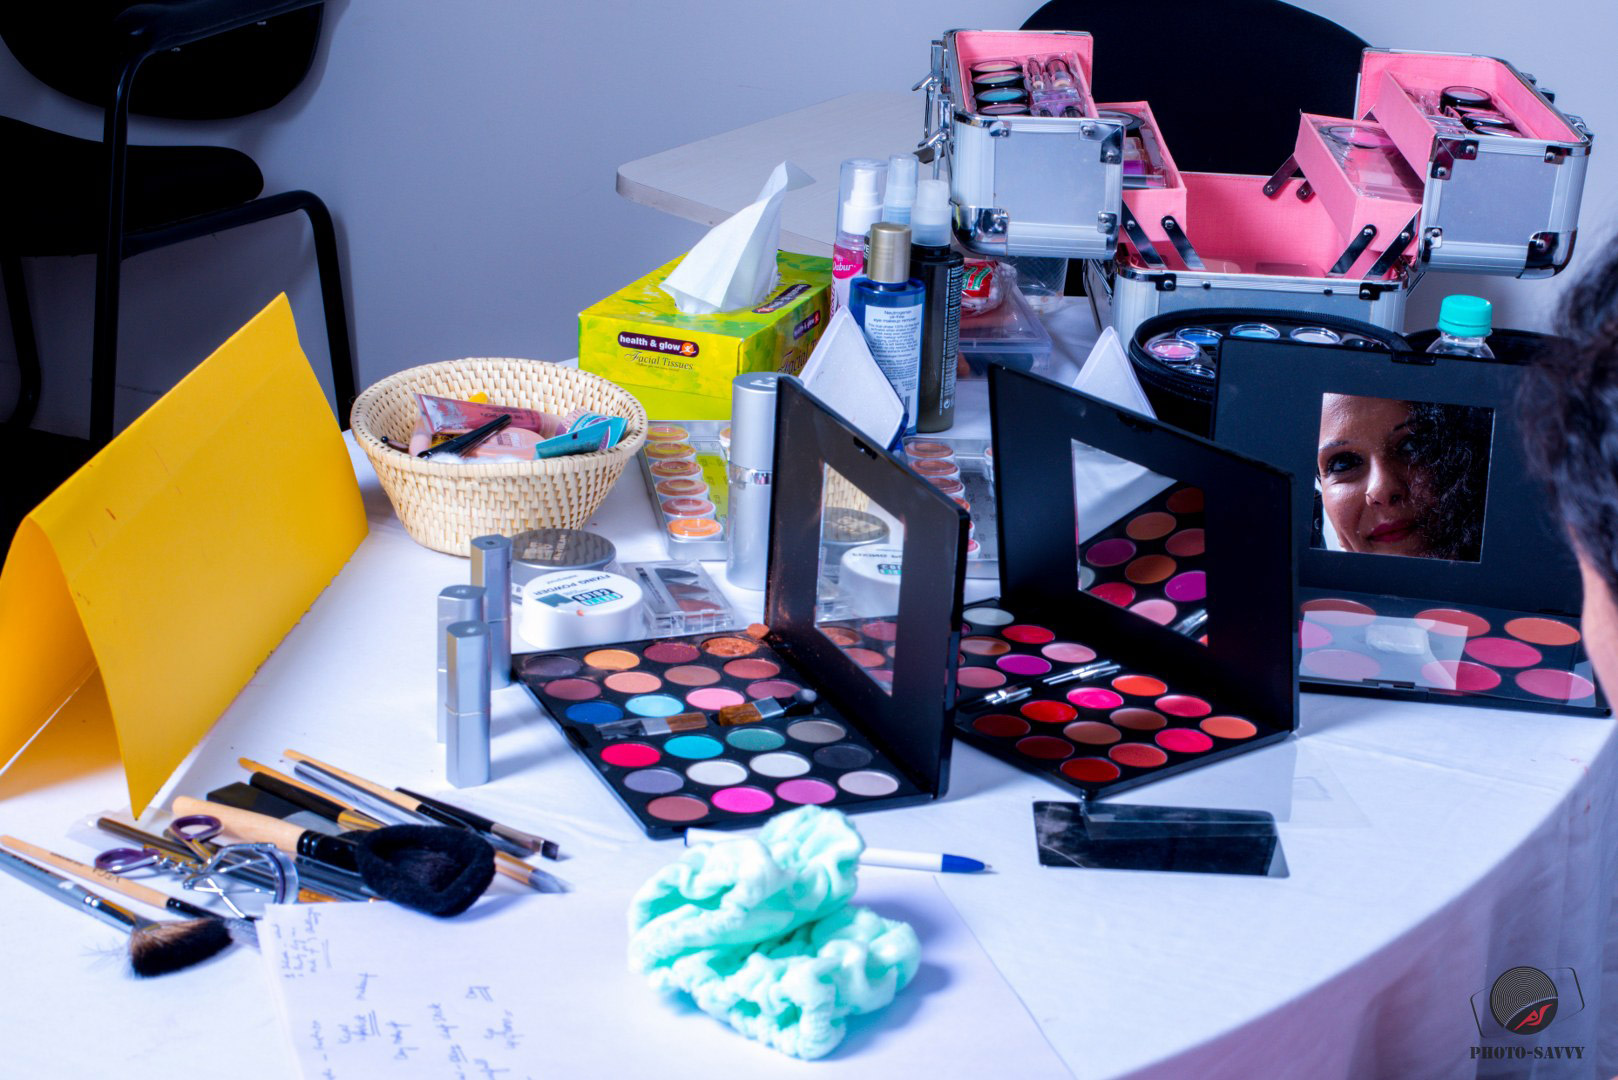  Make Up Workshop at Image Expo